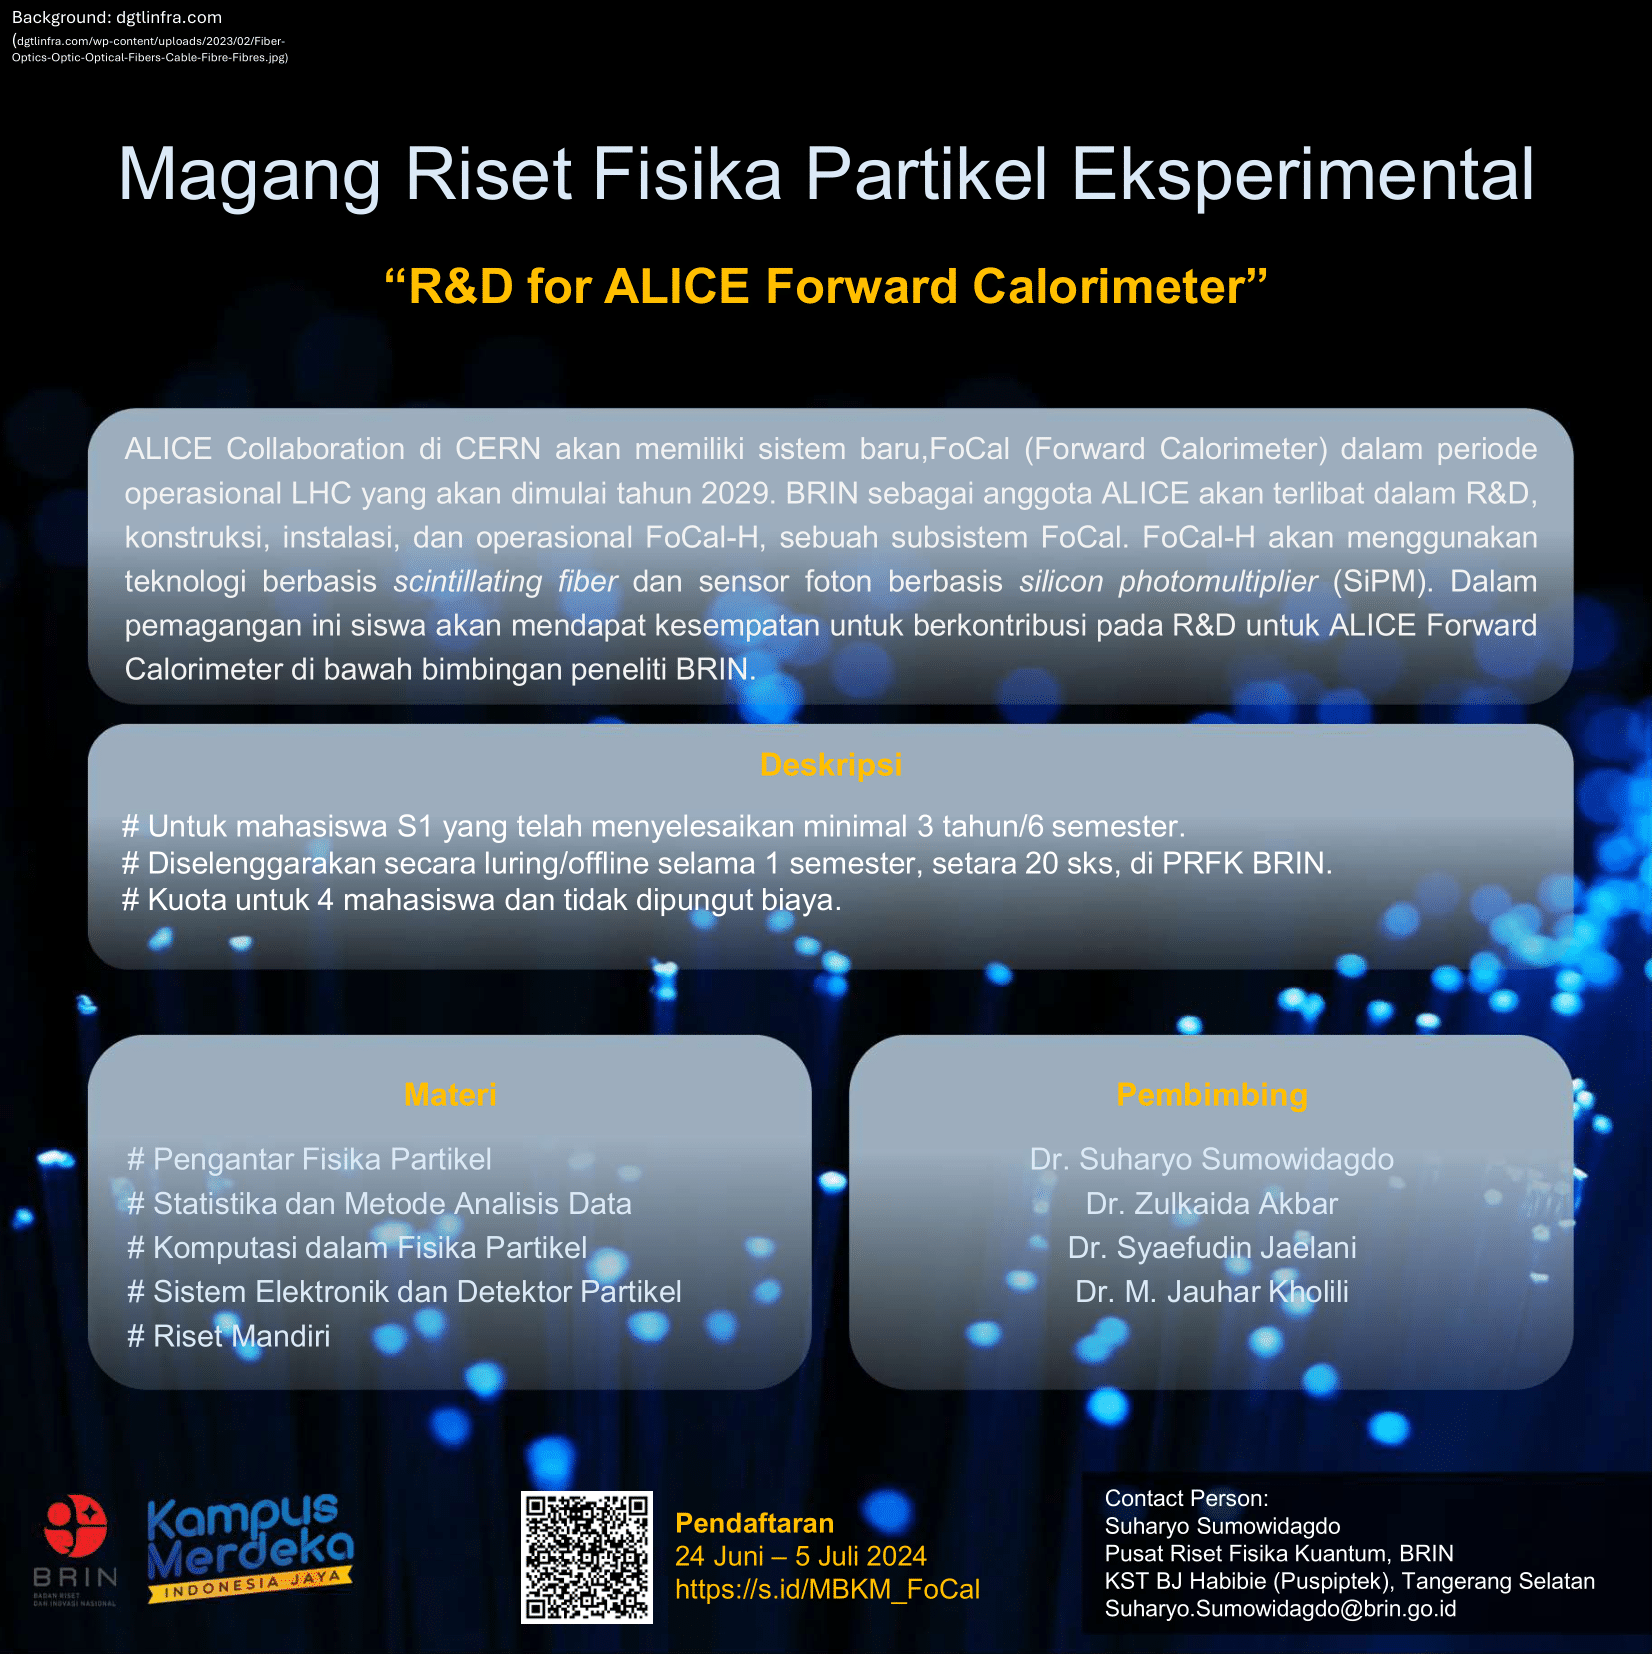 Magang Riset - R & D for ALICE Forward Calorimeter